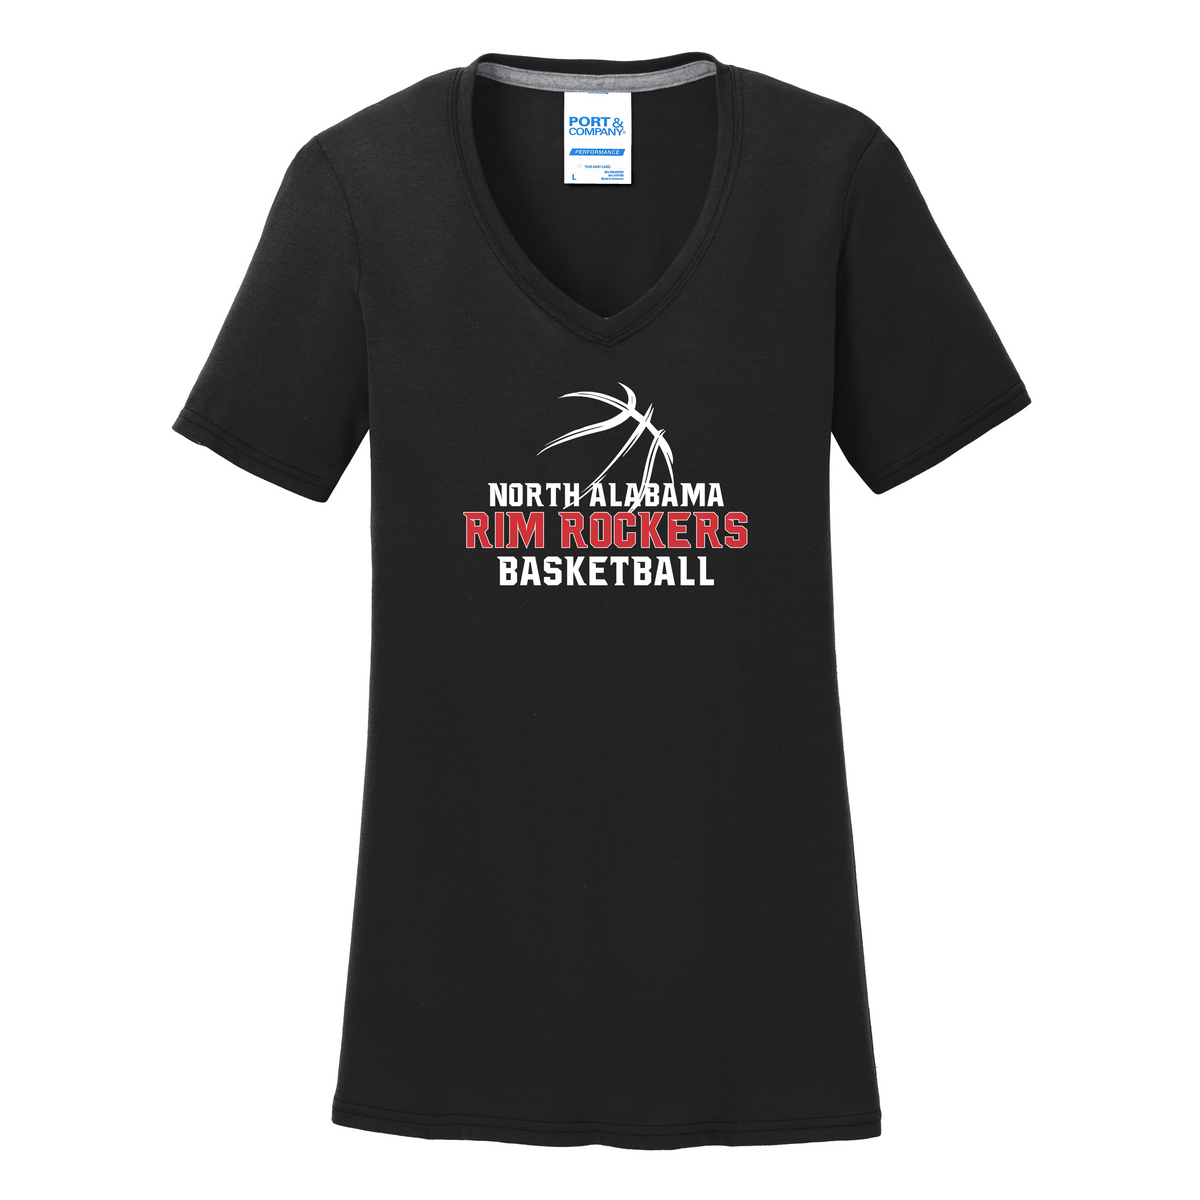 Rim Rockers Basketball Women's T-Shirt